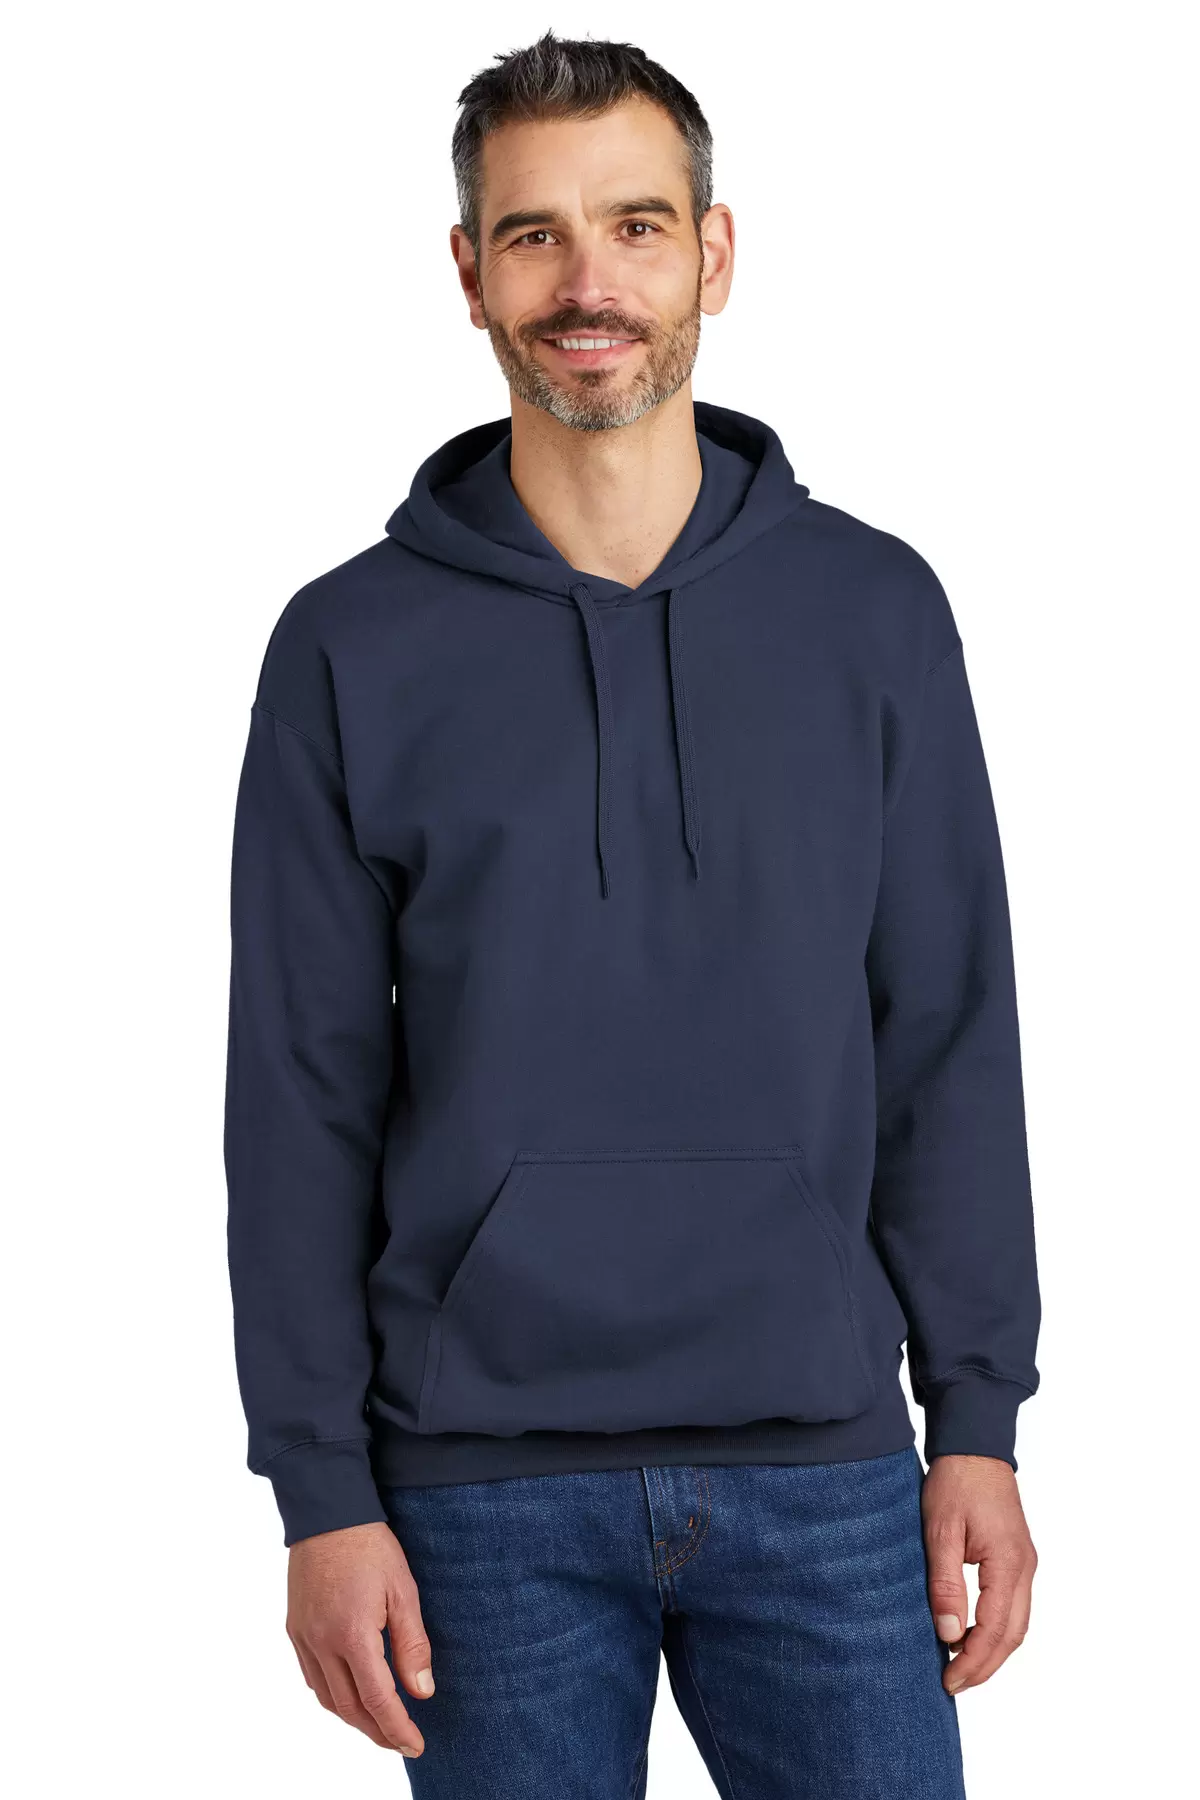 Gildan SF500 - Adult Softstyle Fleece Pullover Hooded Sweatshirt, Stone Blue, L